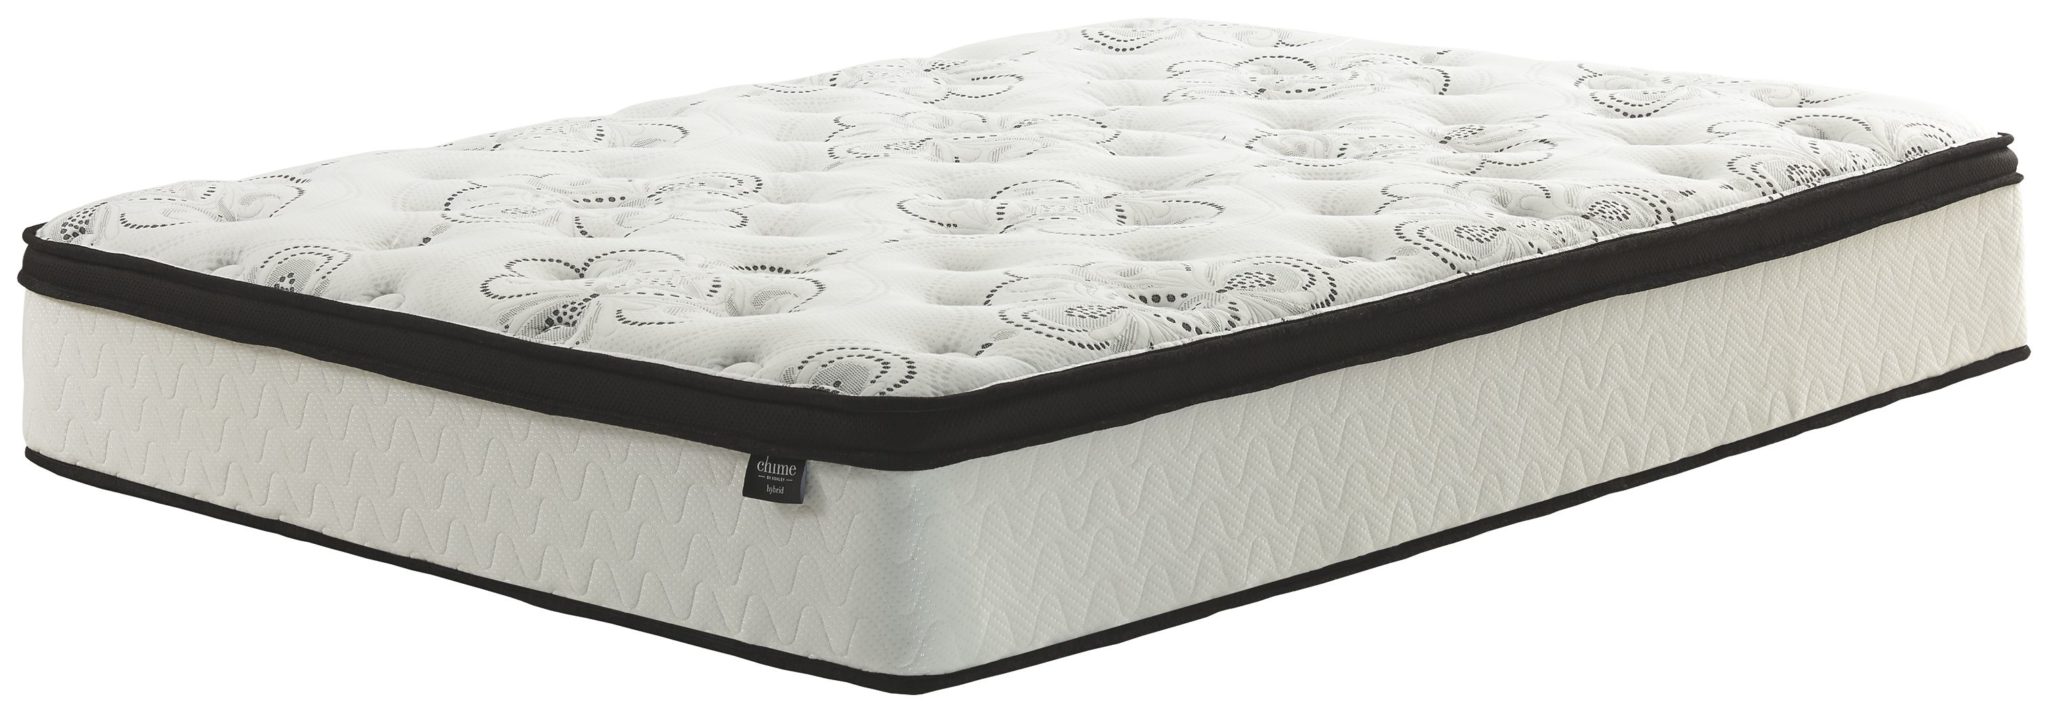 ashley furniture chime mattress lawsuit